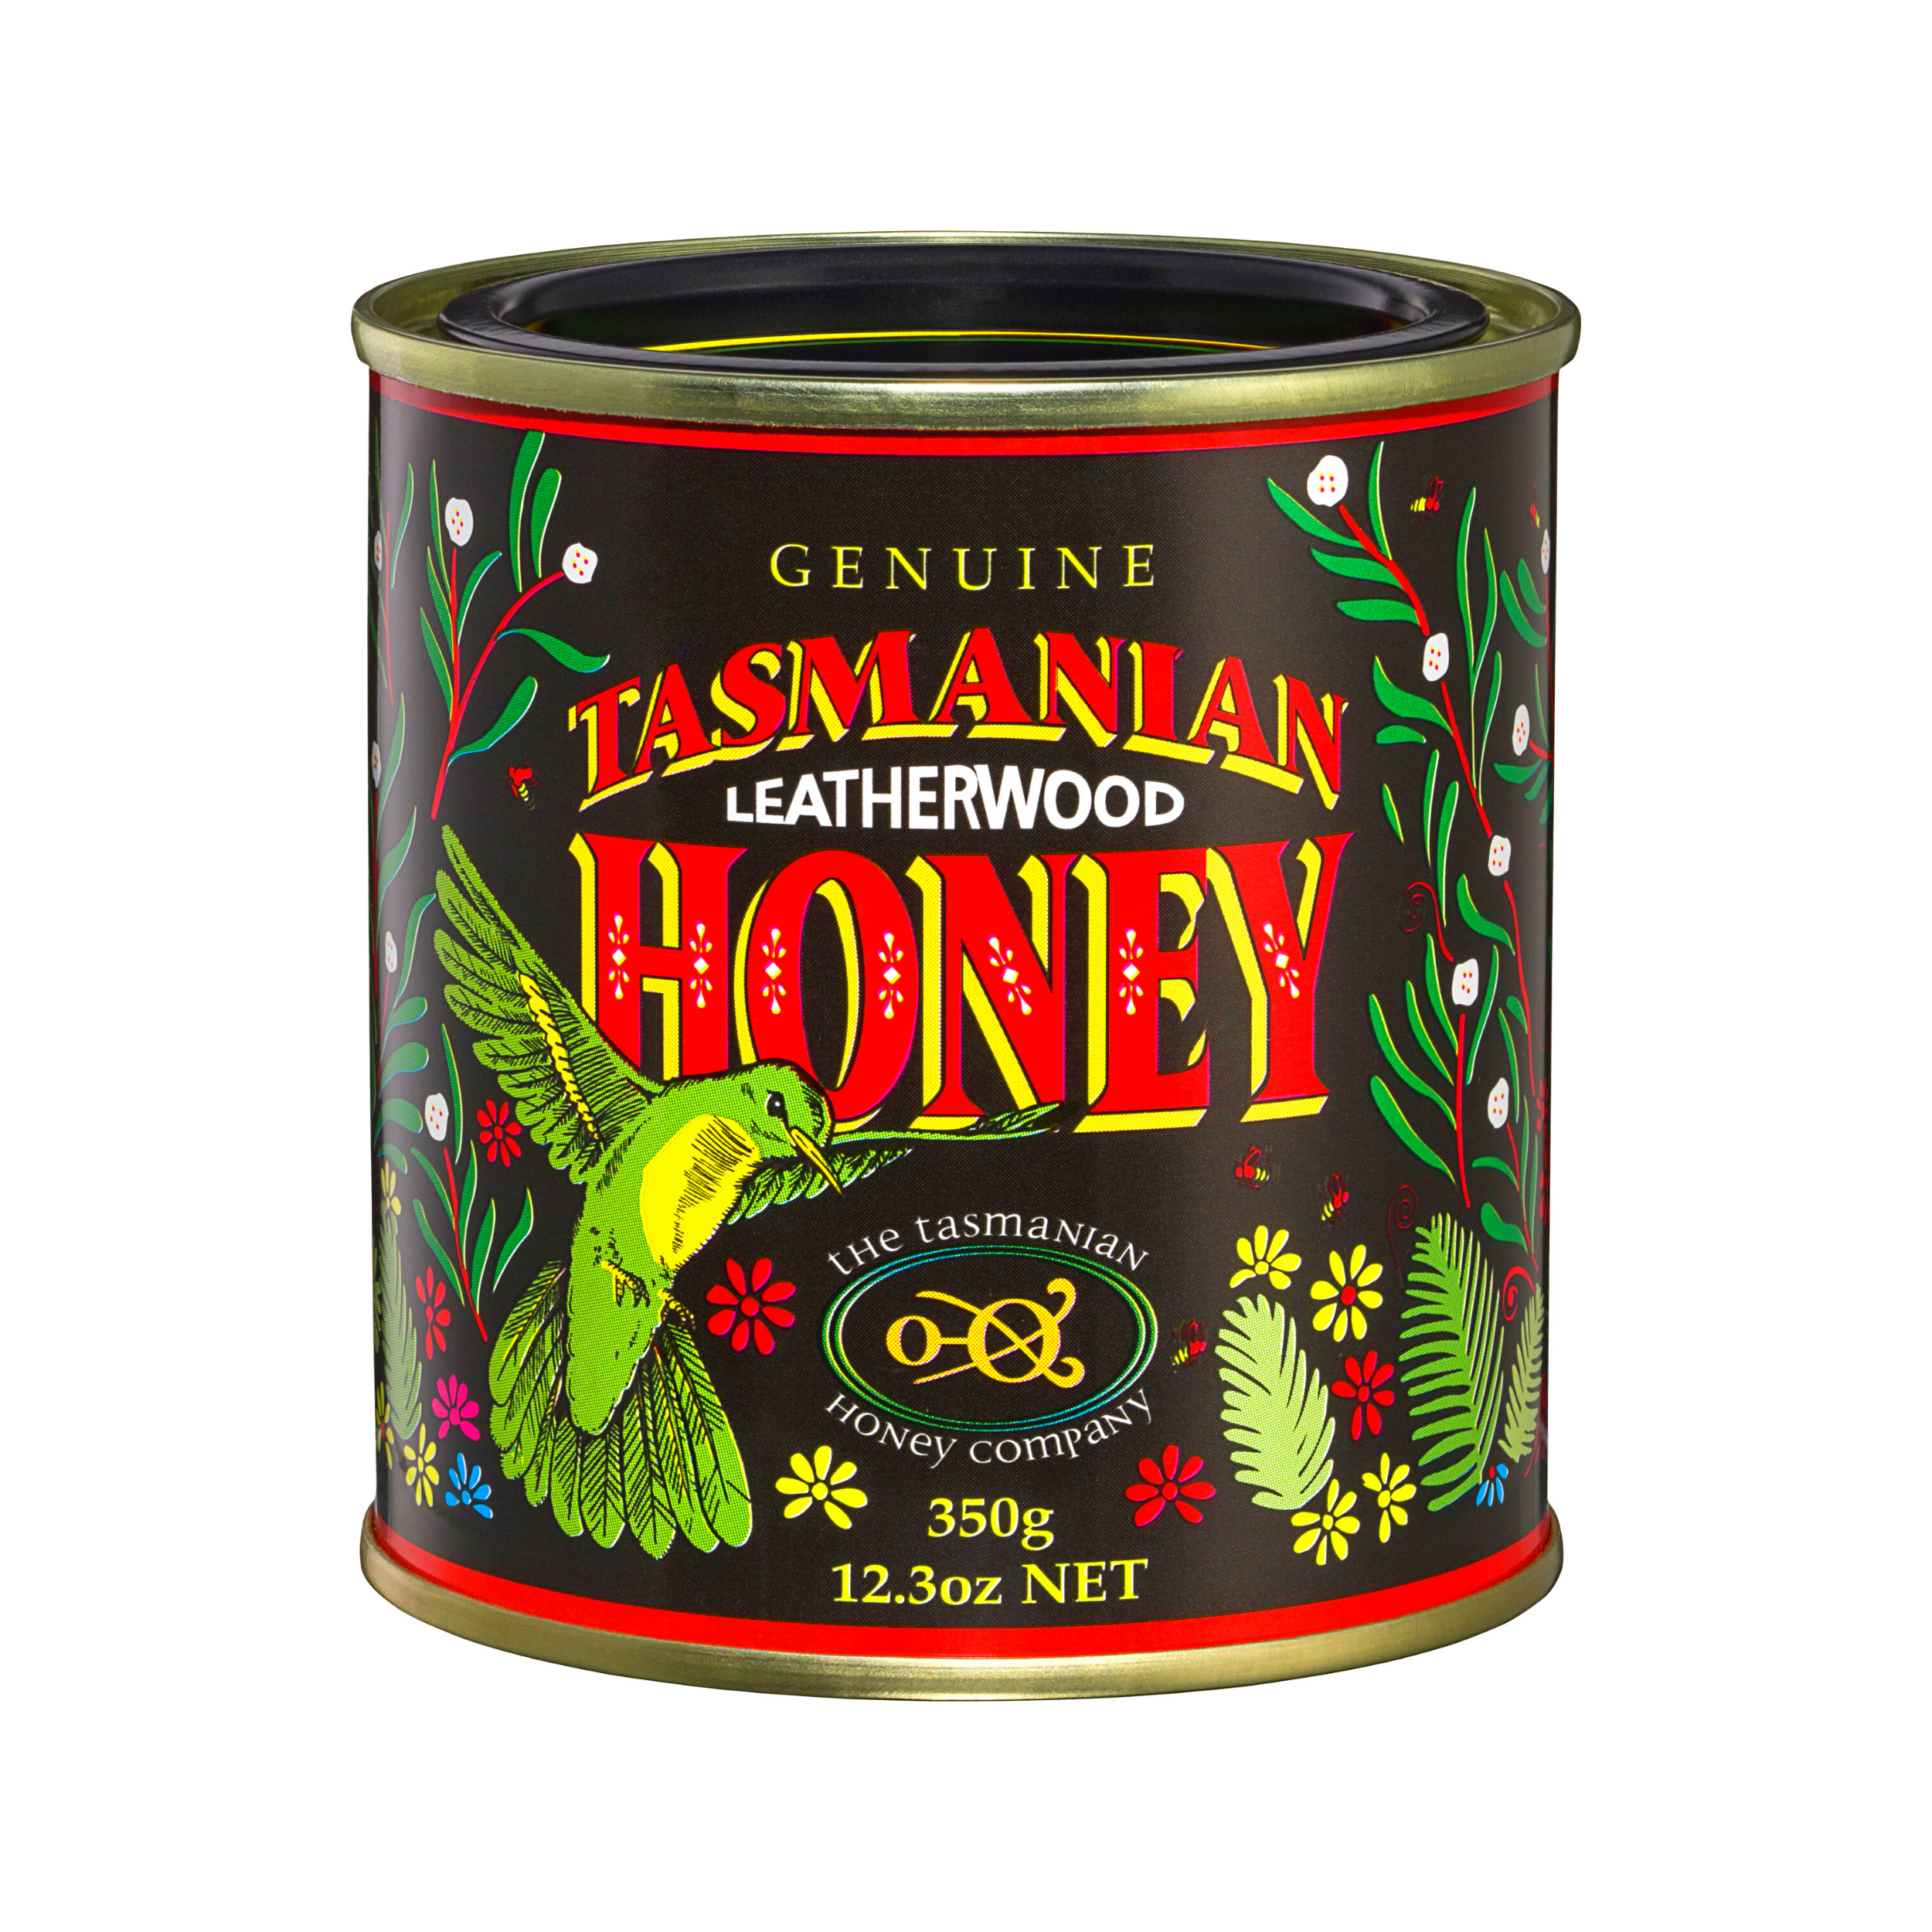 Tasmanian Leatherwood Honey 350g tin